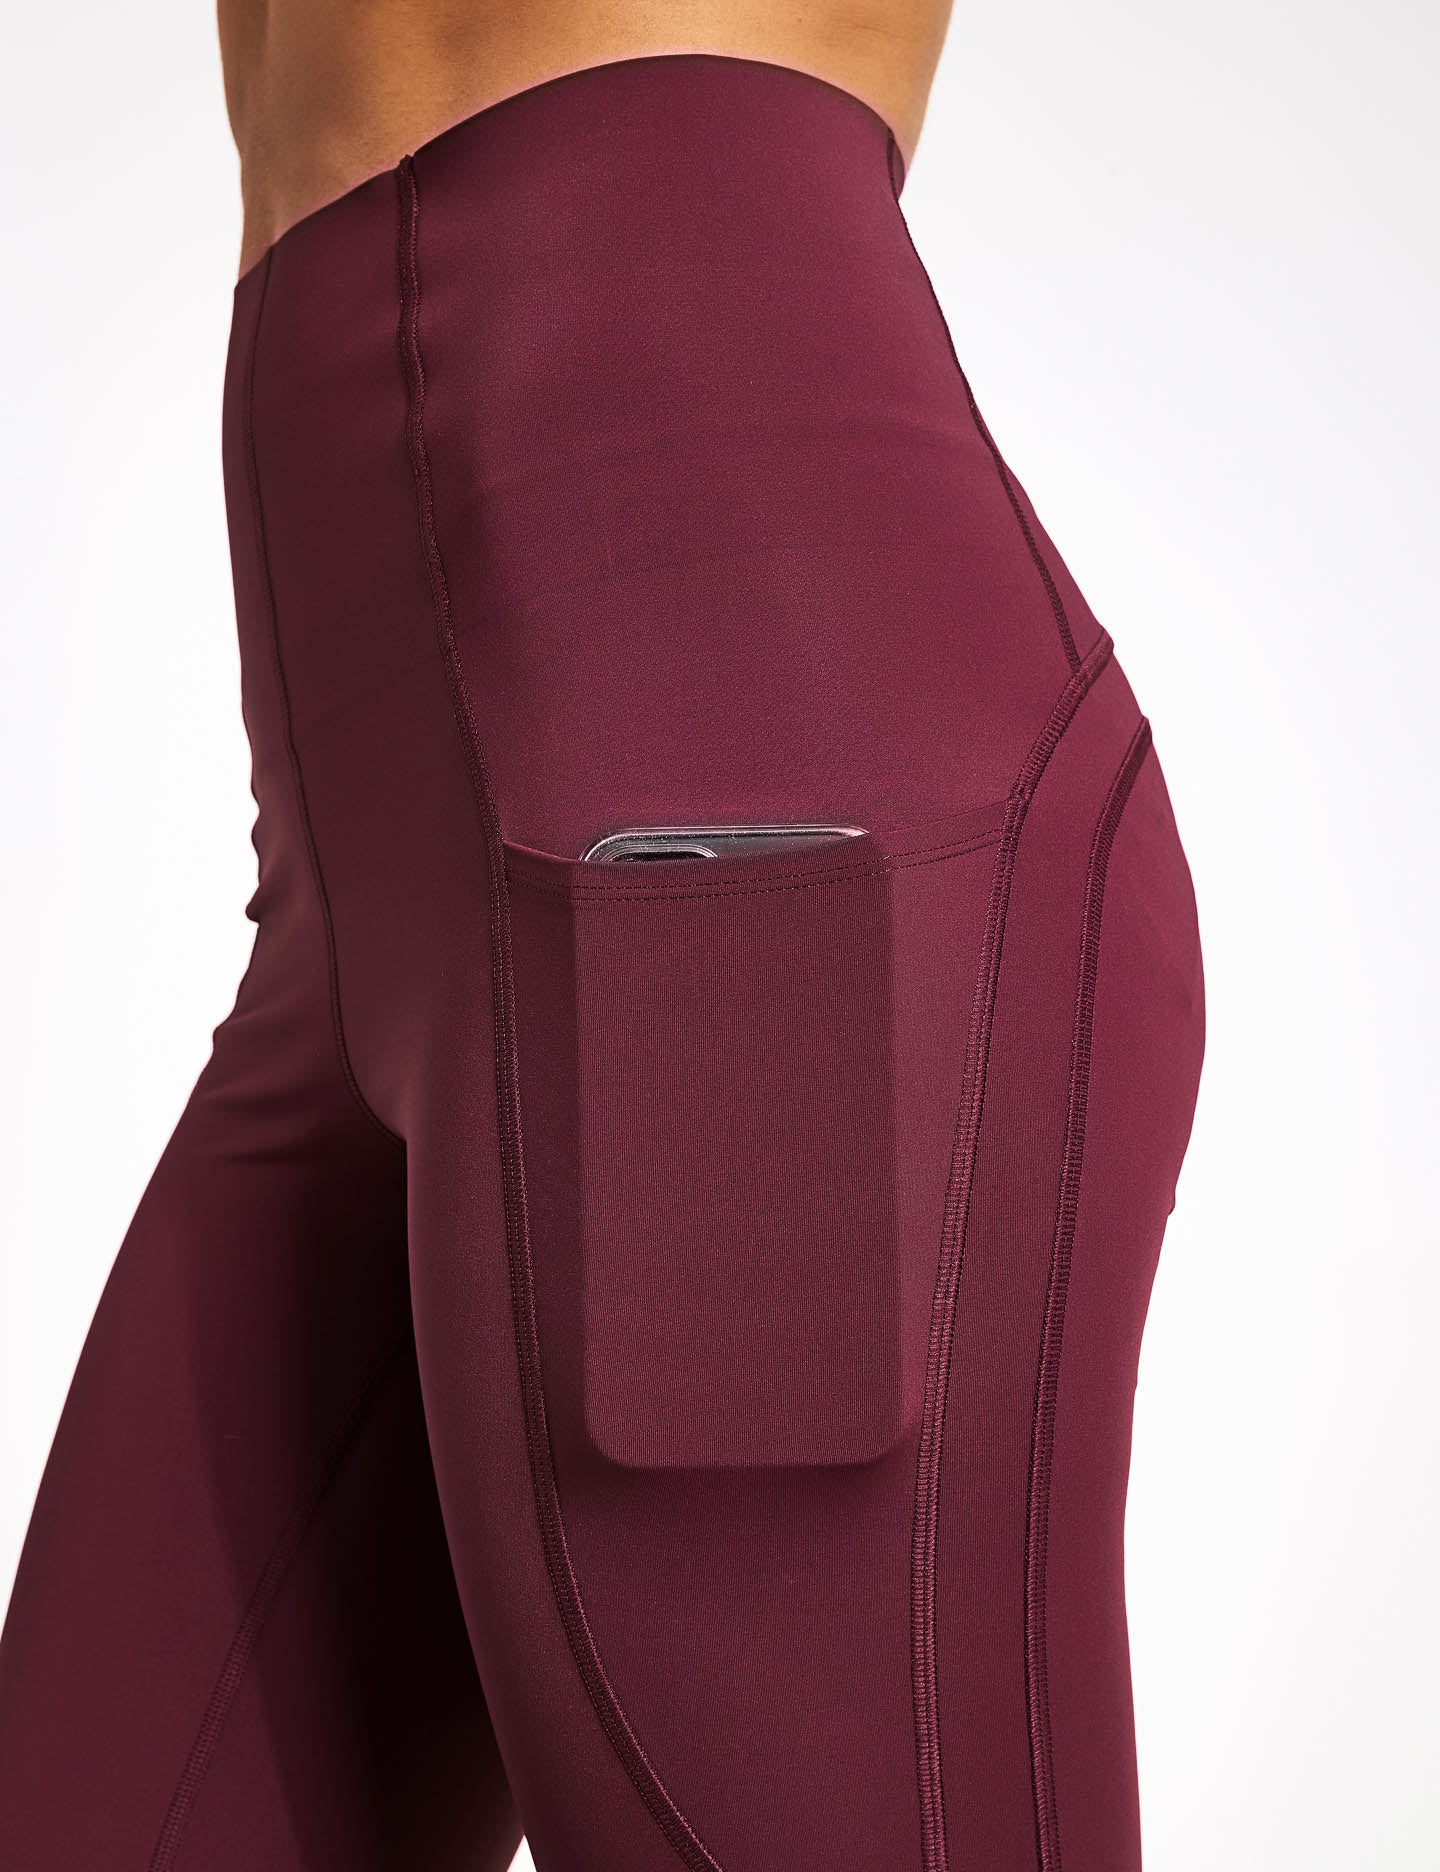 NWOT Shapermint Essentials High waisted shapewear leggings in burgundy